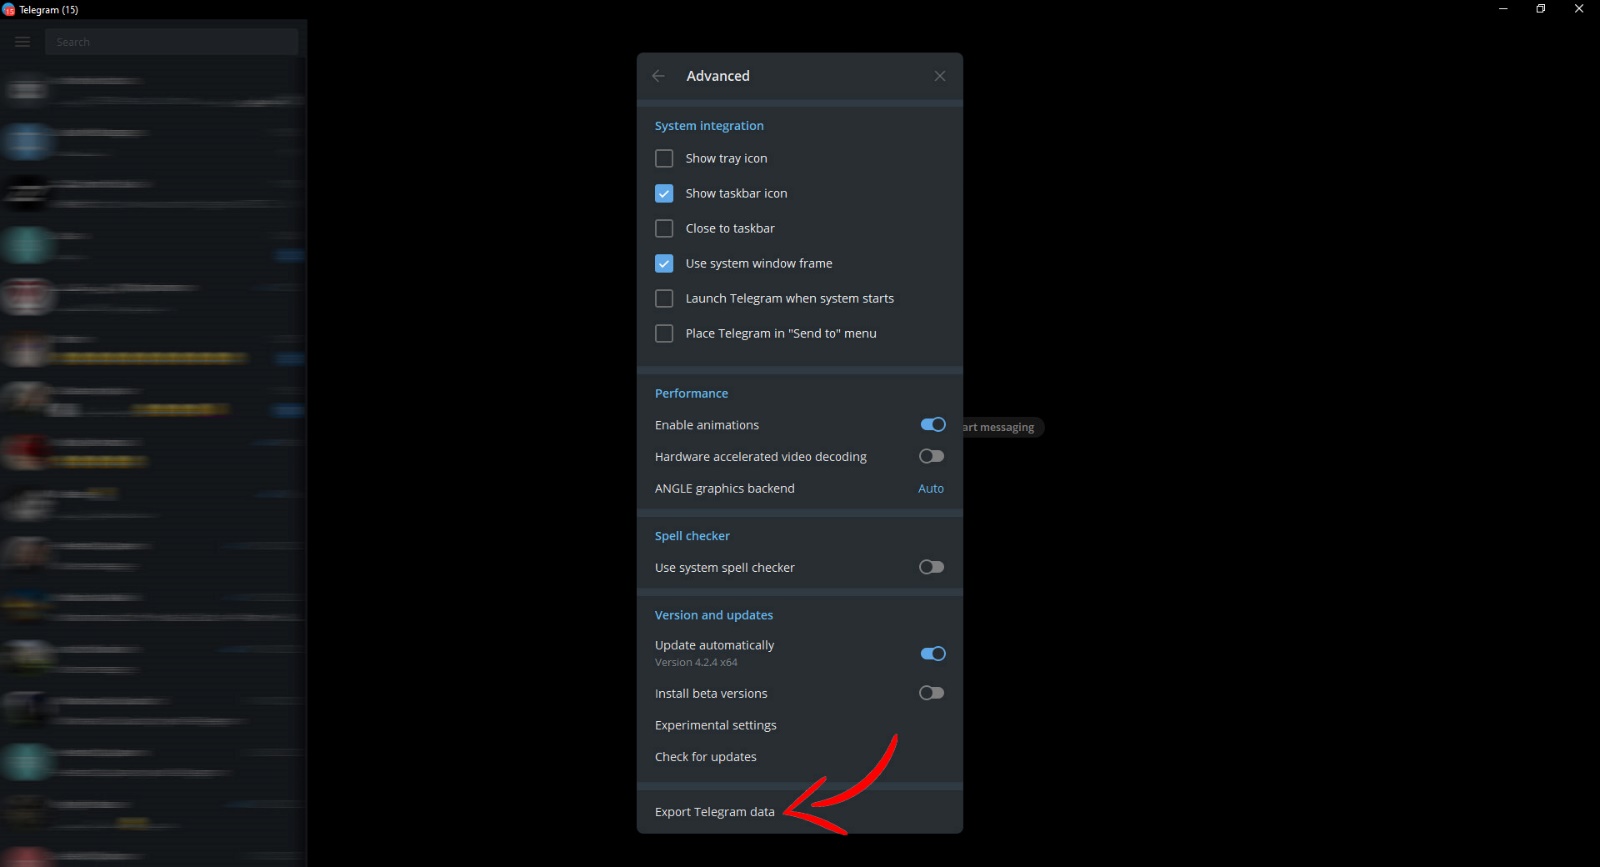 Advanced menu in Telegram desktop